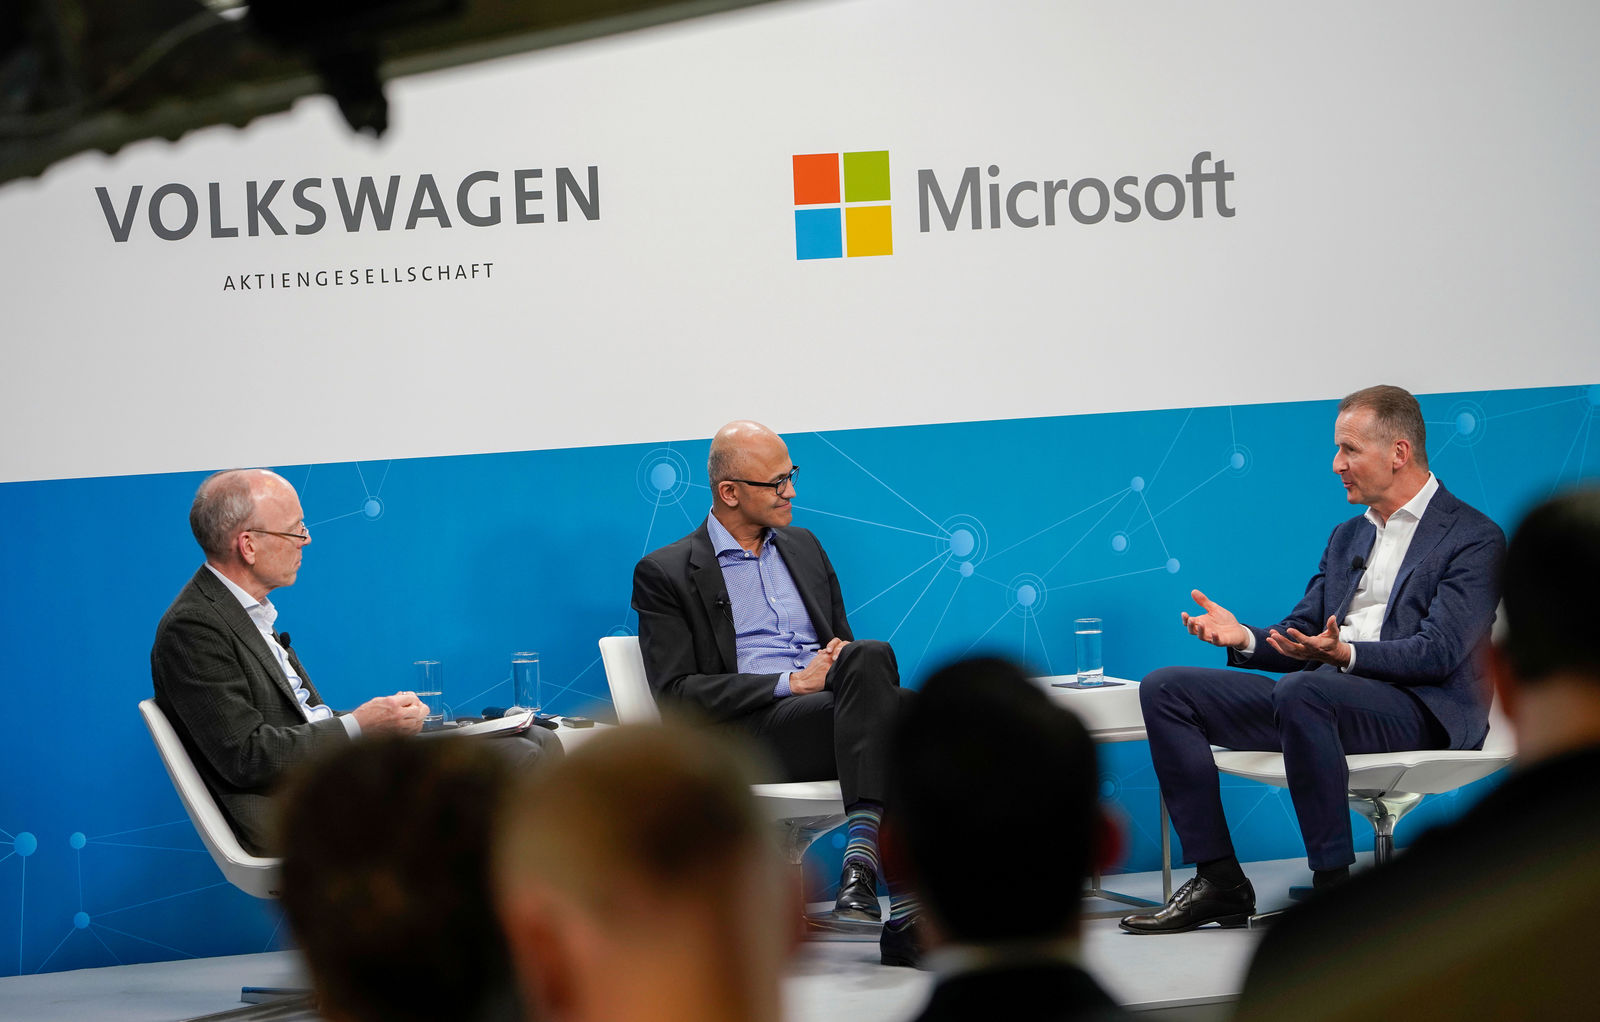 Volkswagen and Microsoft share progress on strategic partnership